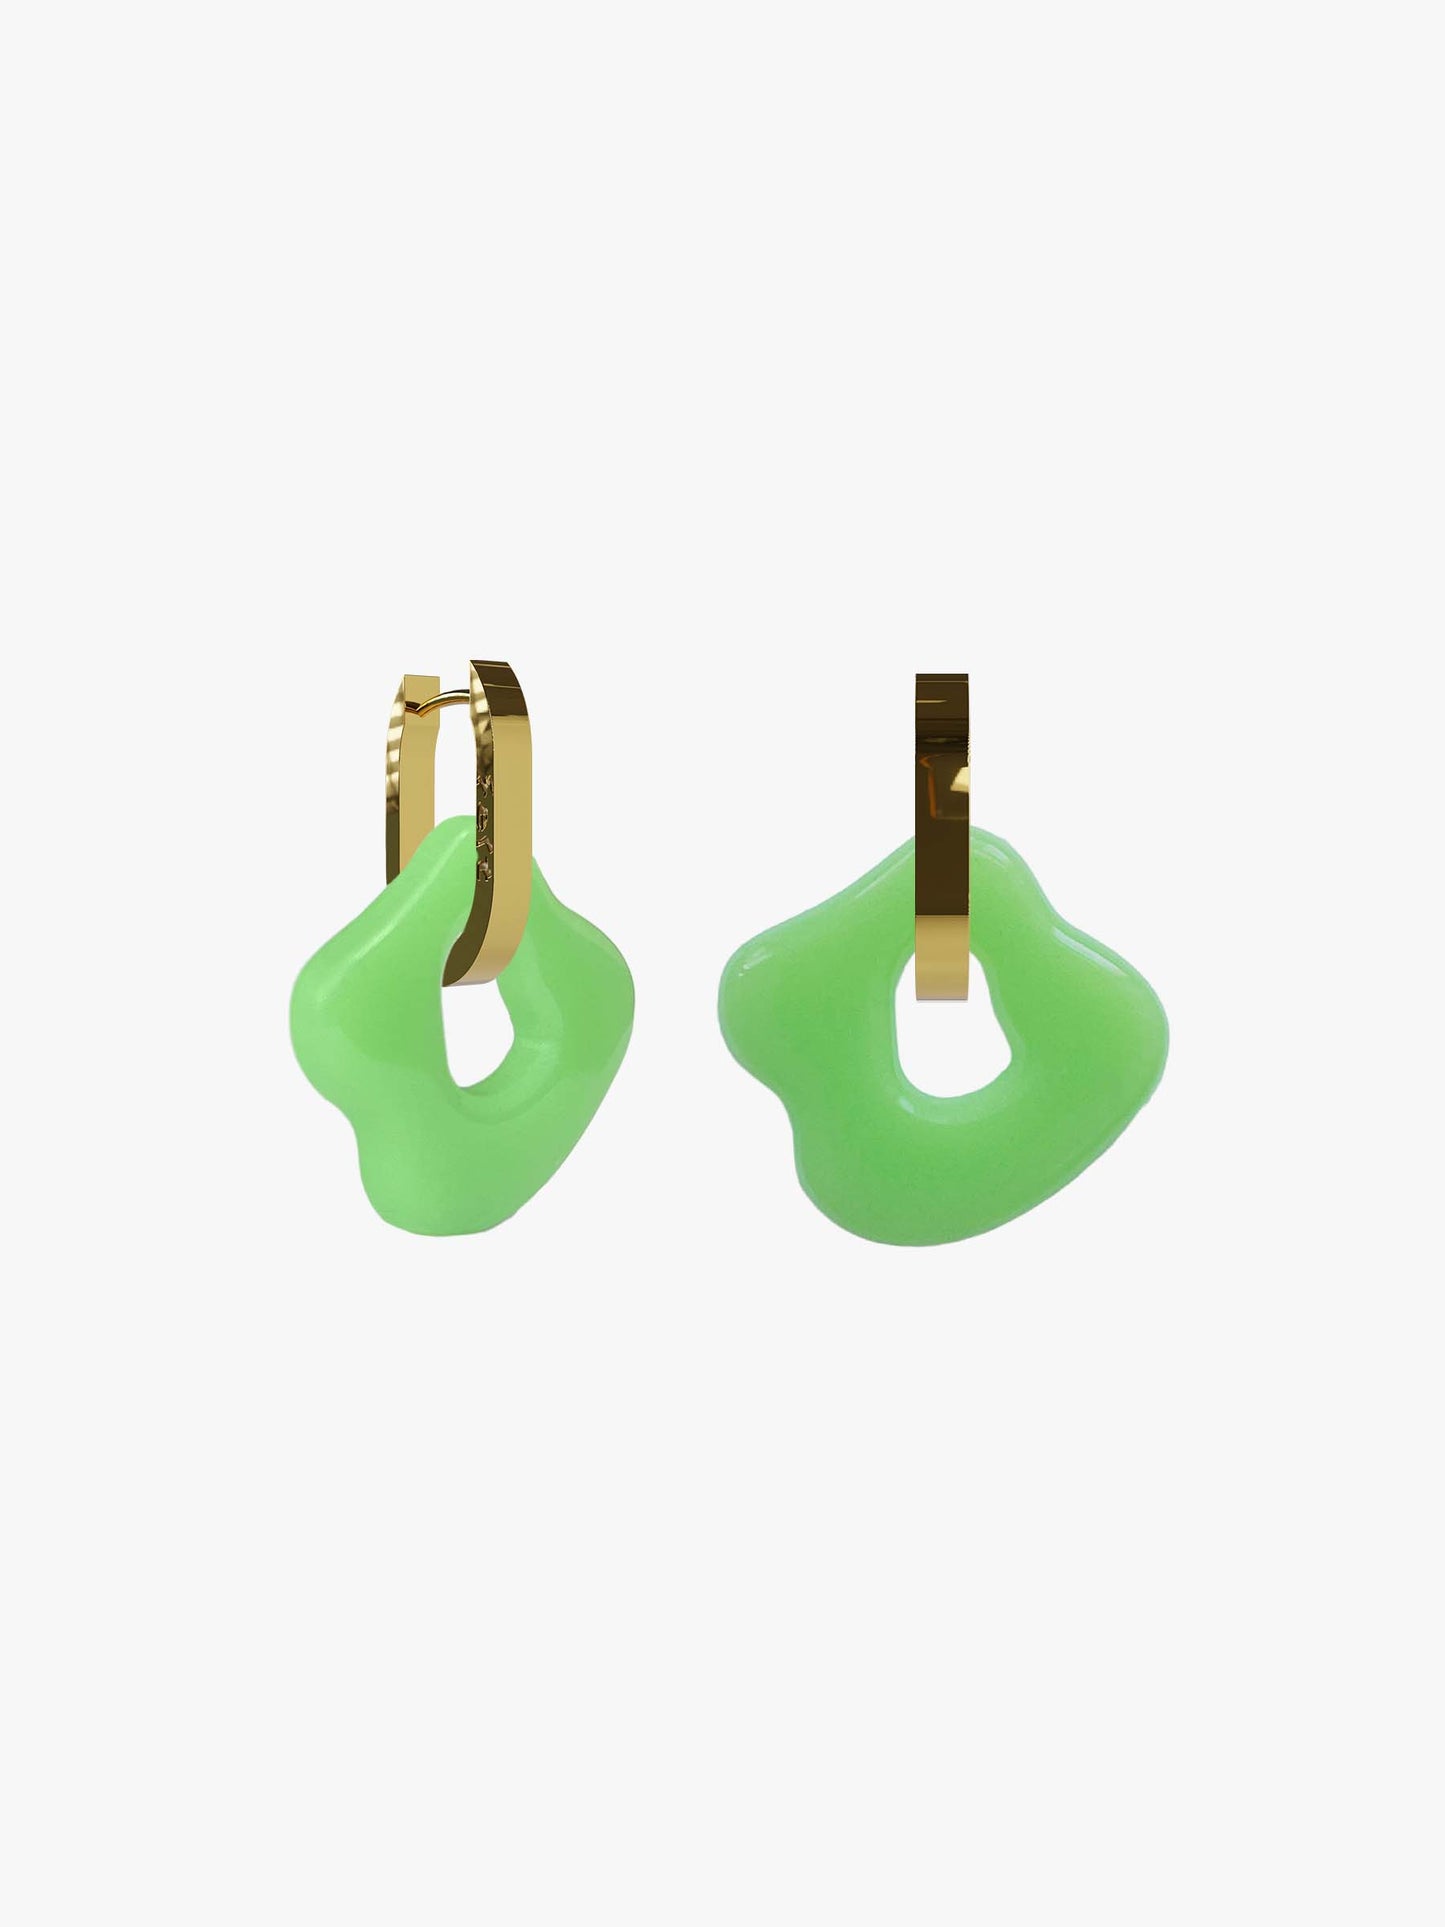 Sol mint green gold earring (pair)